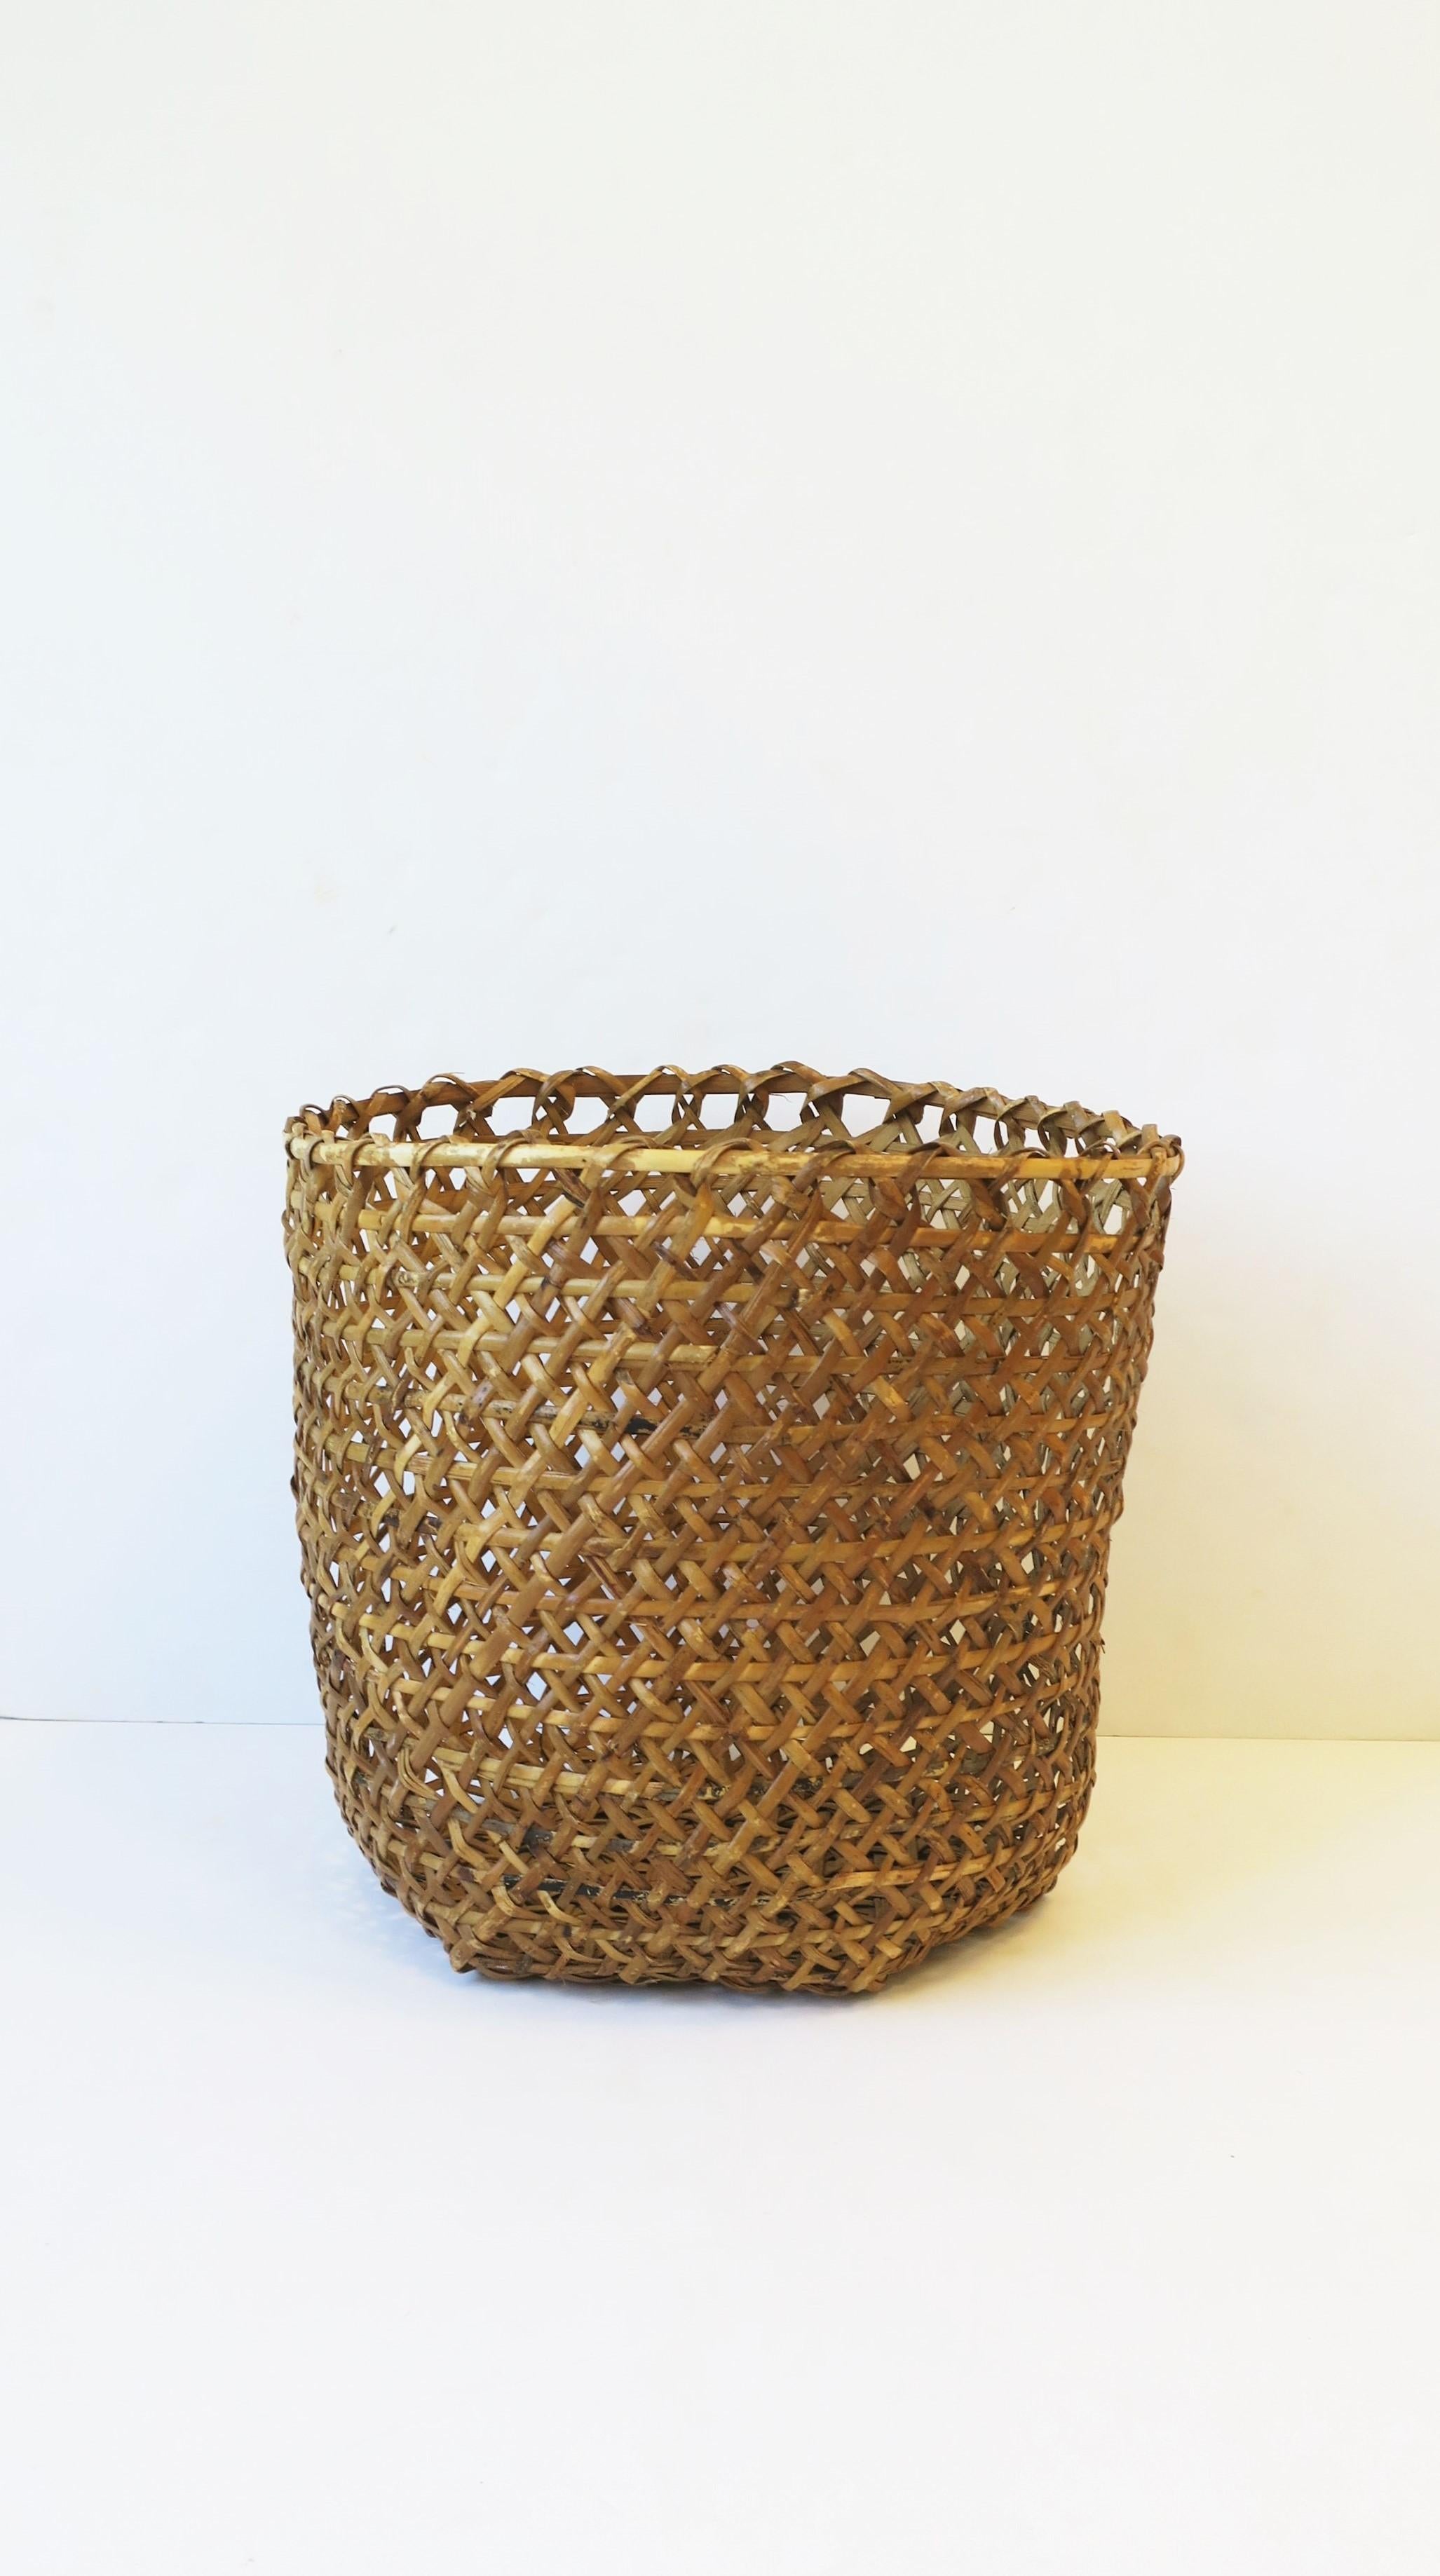 20th Century Vintage Wicker Basket Cachepot or Wastebasket Trash Can